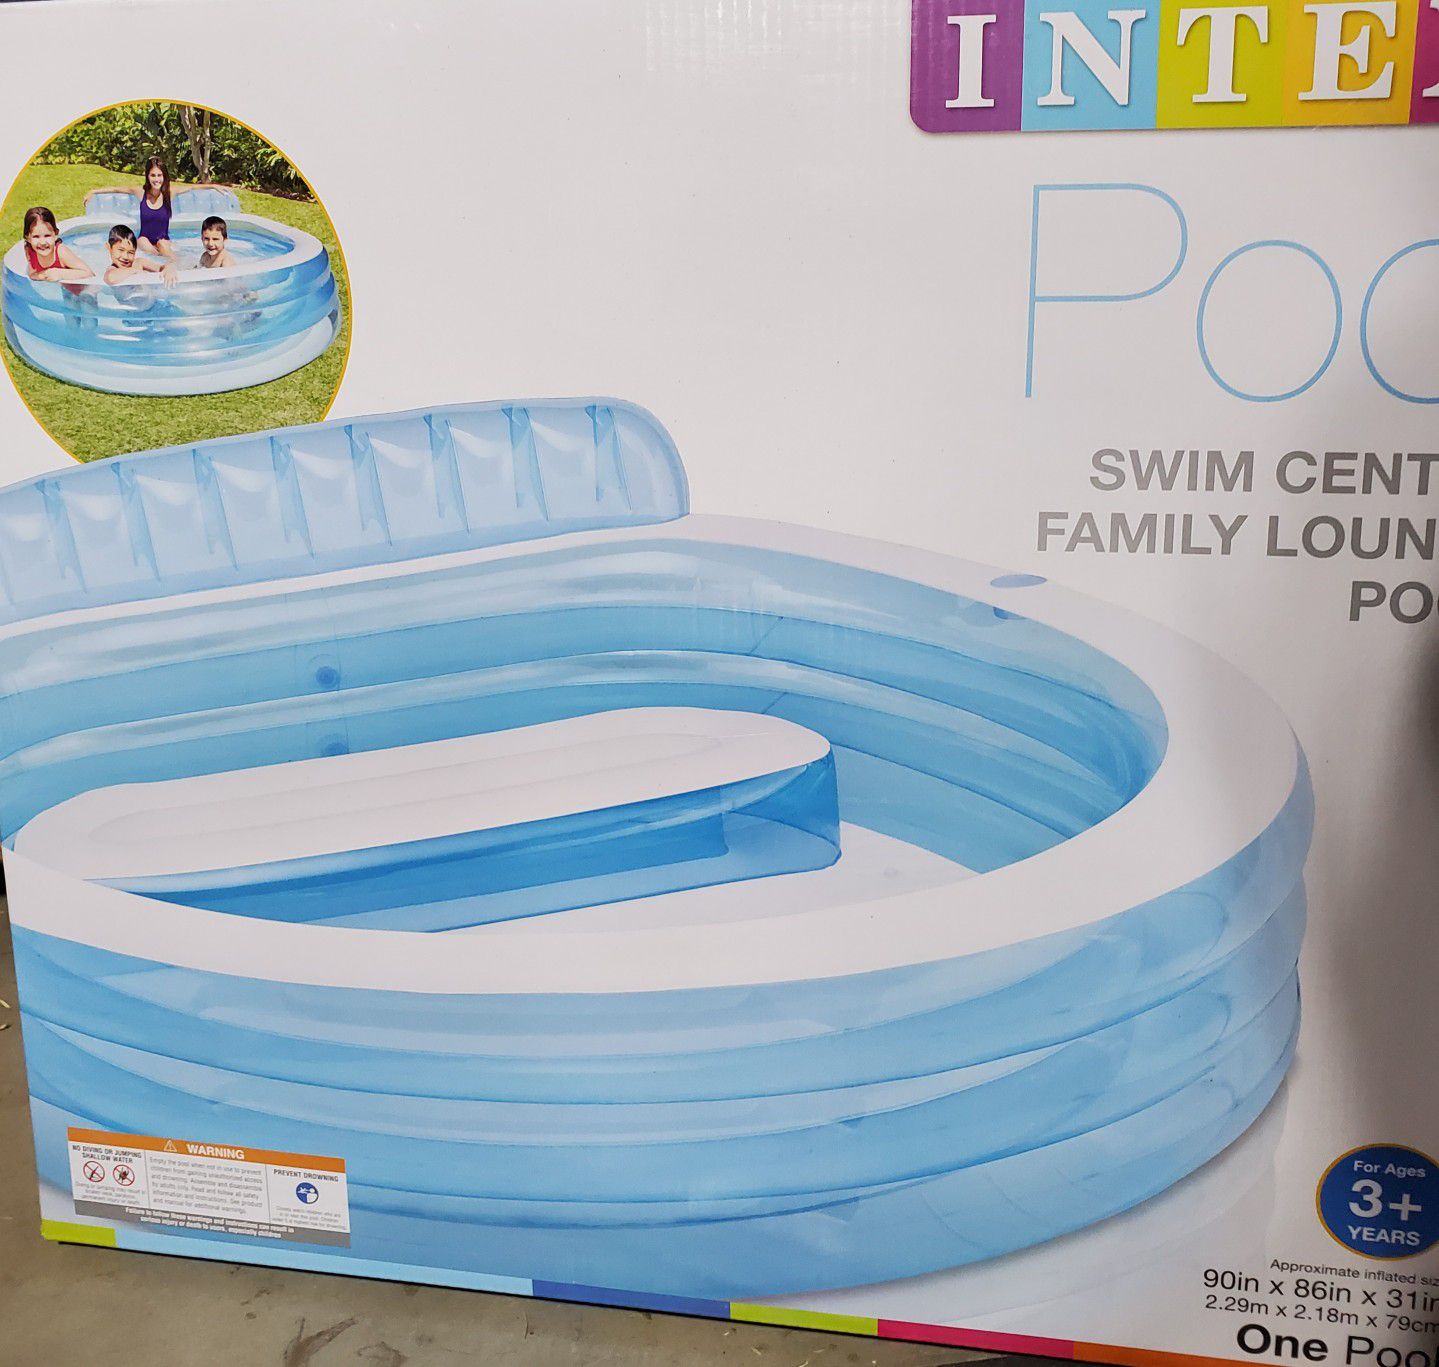 Intex Swimming Pool Inflatable Pool FAMILY LOUNGE POOL New